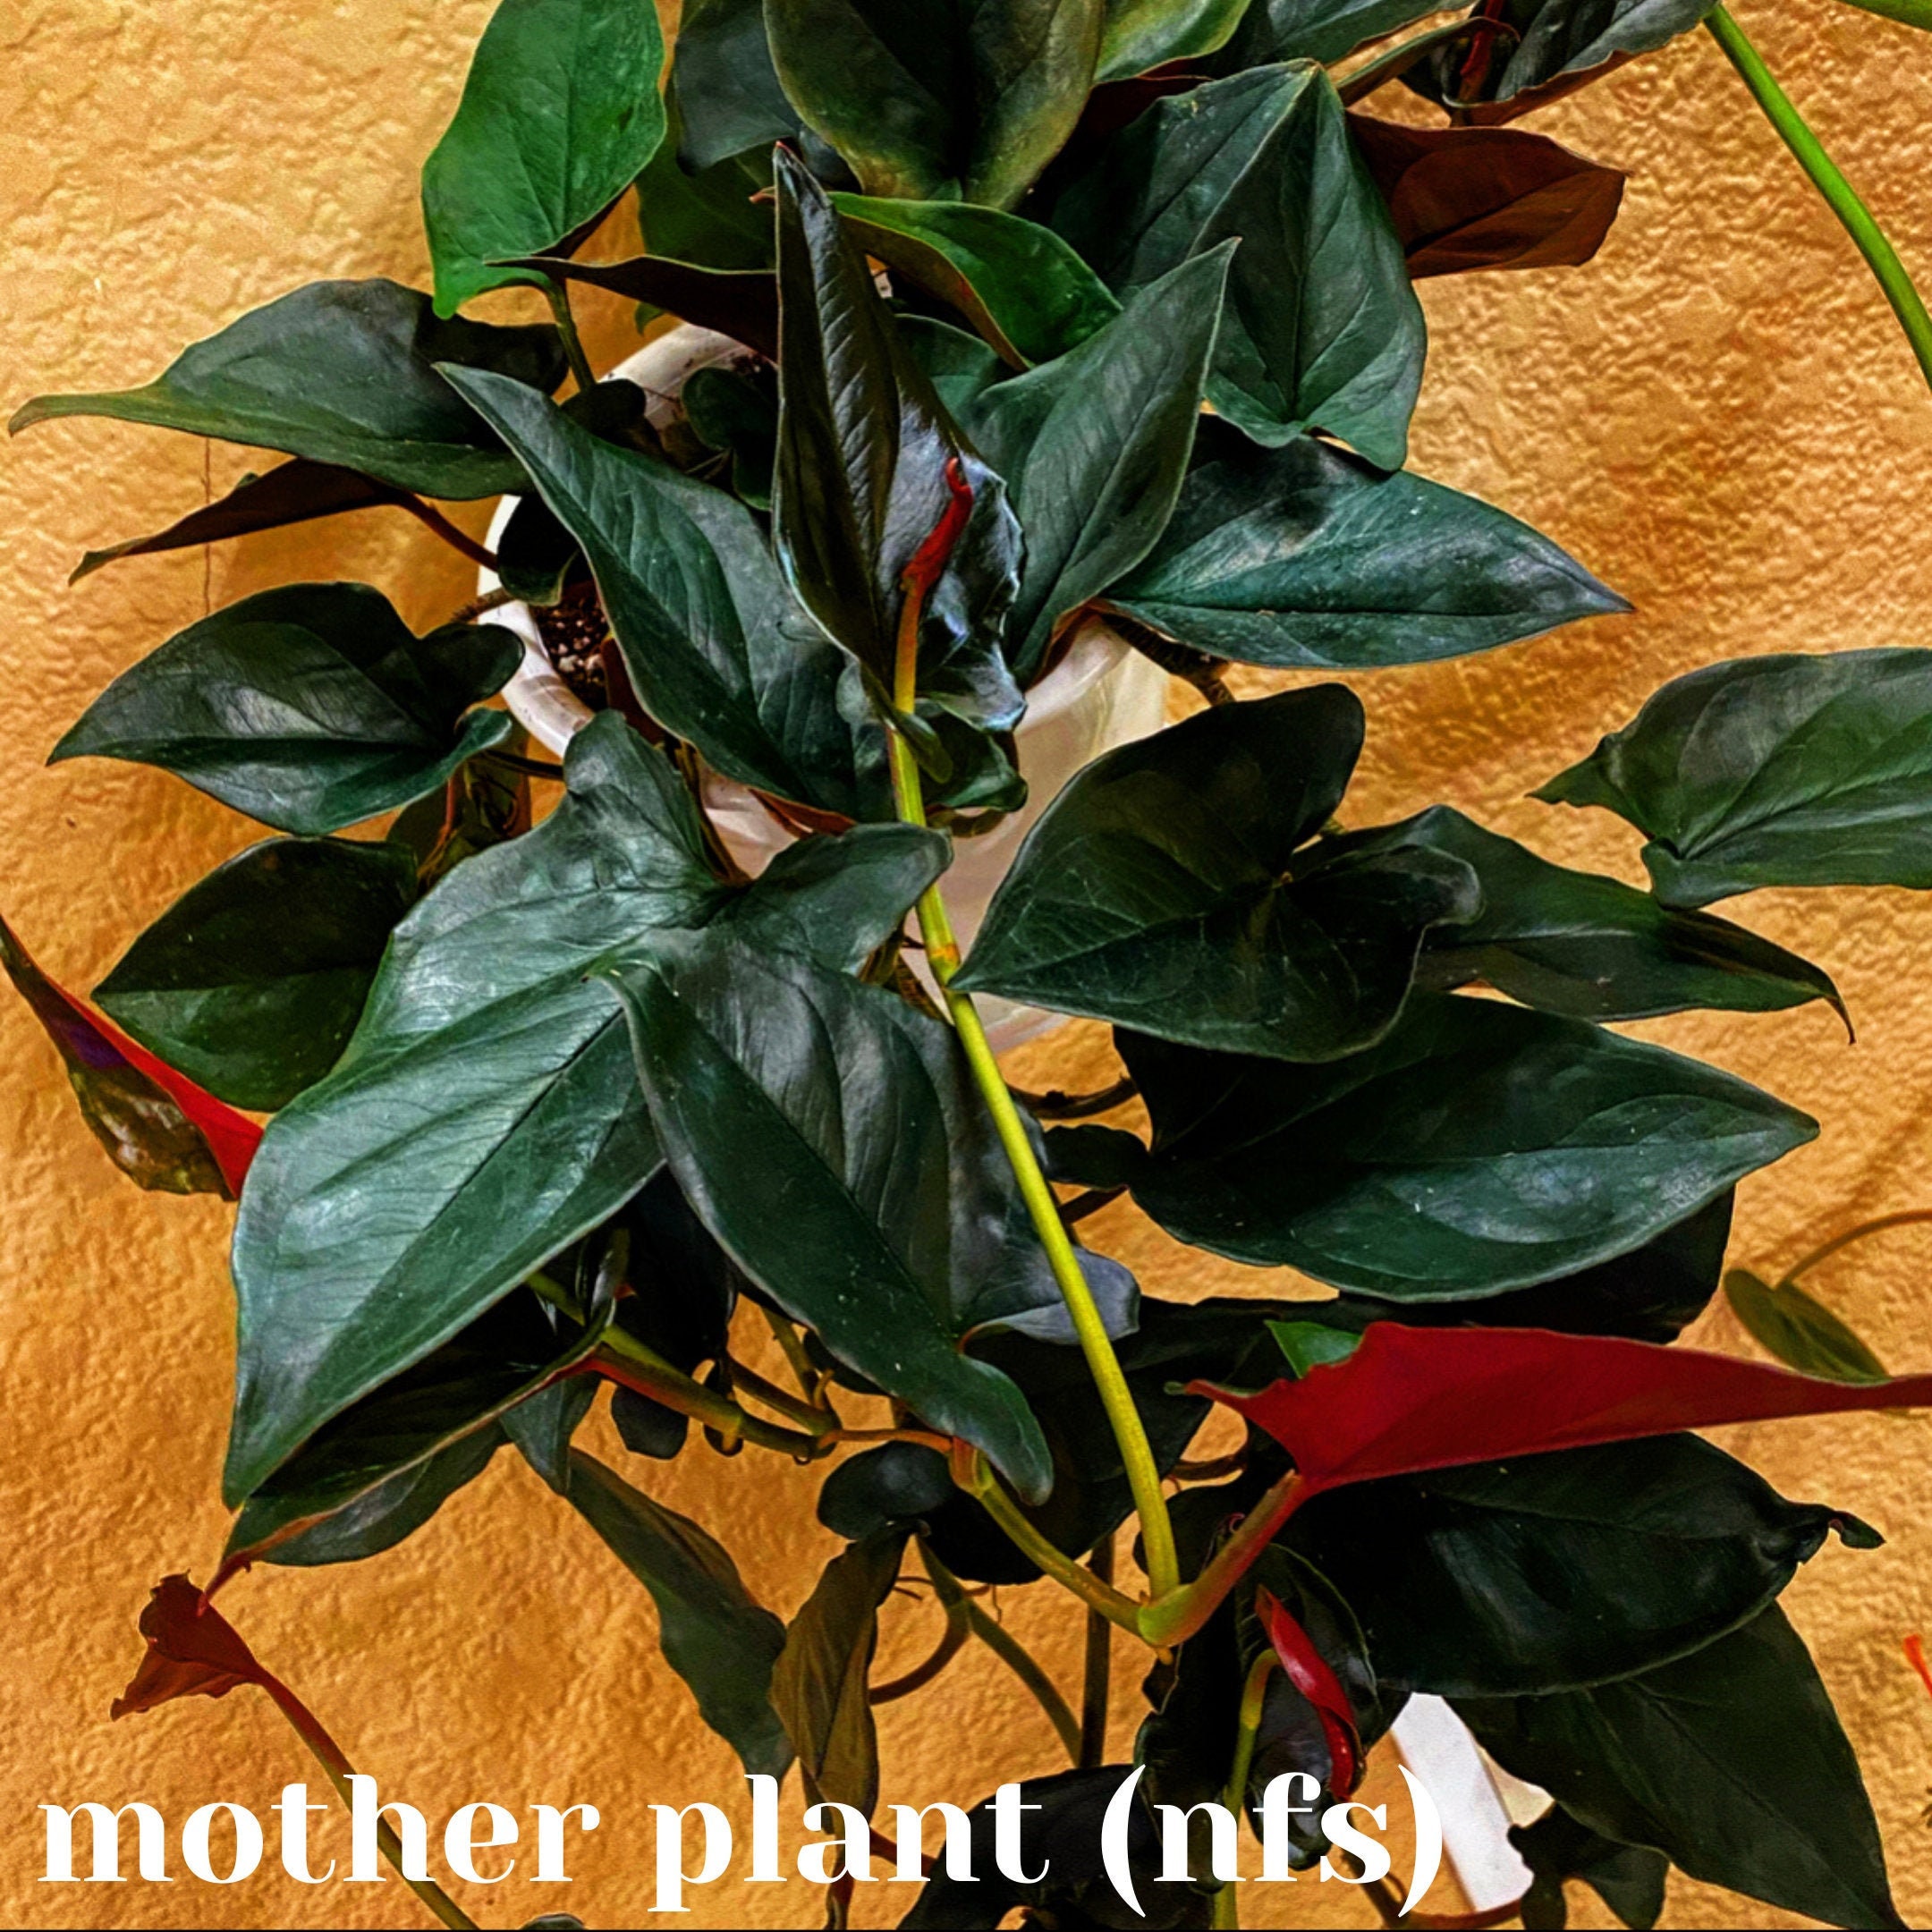 Rare Syngonium Erythrophyllum Red Arrow 'Llano Carti Road' CUTTINGS | Rare Black Arrowhead Trailing Vining Plant | Exact CUTTING in Photos |